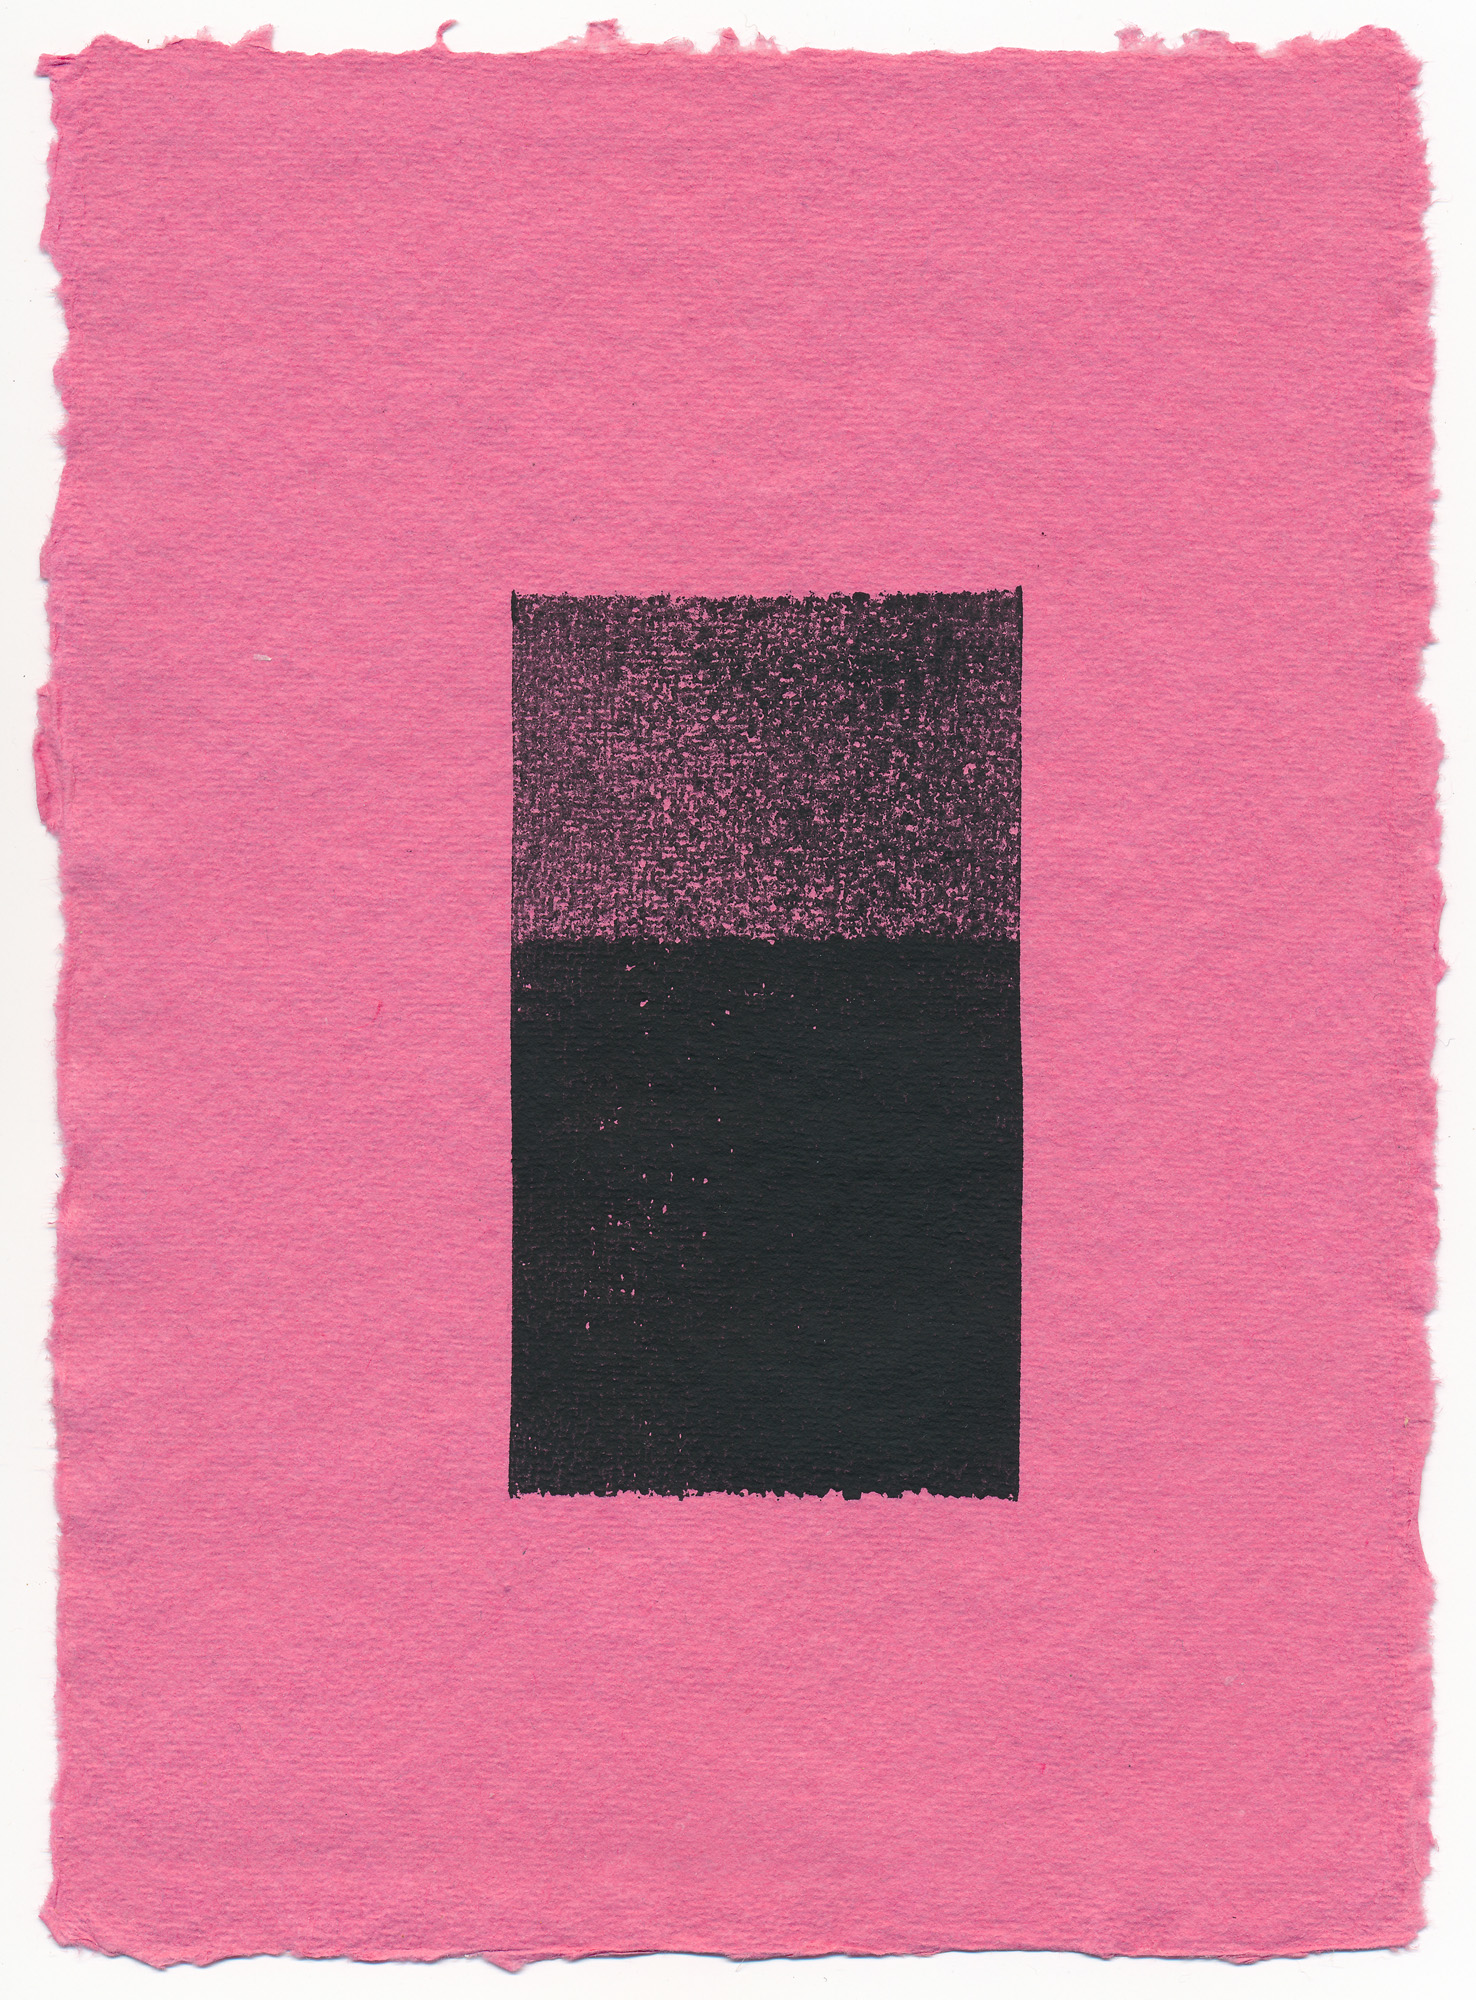 Tickled Pink, monoprint, Mike Tedder